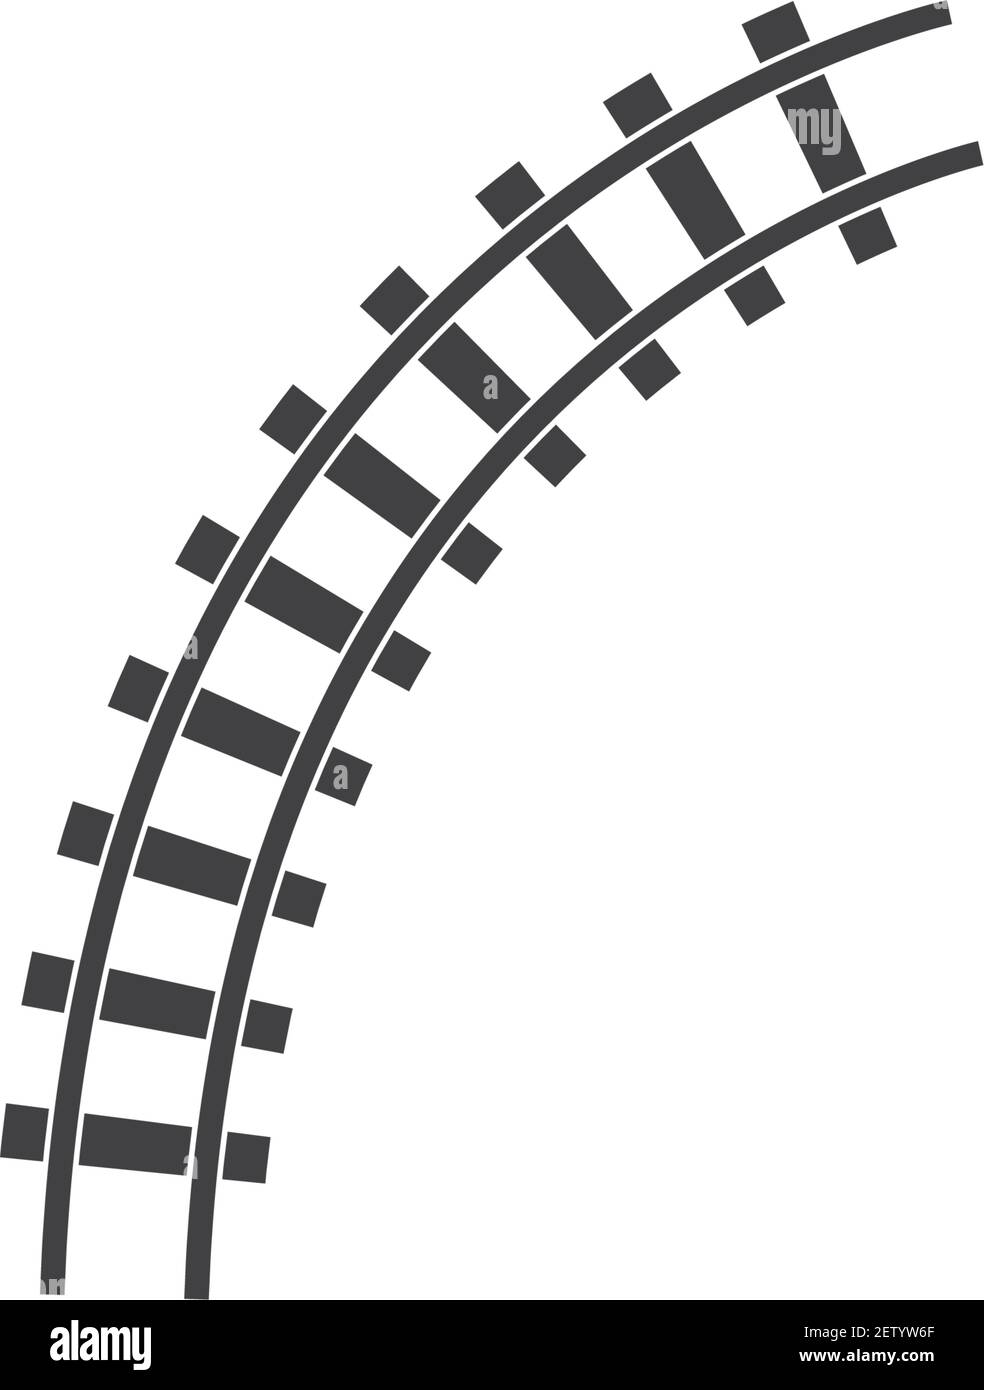 rail way track vector illustration design template Stock Vector